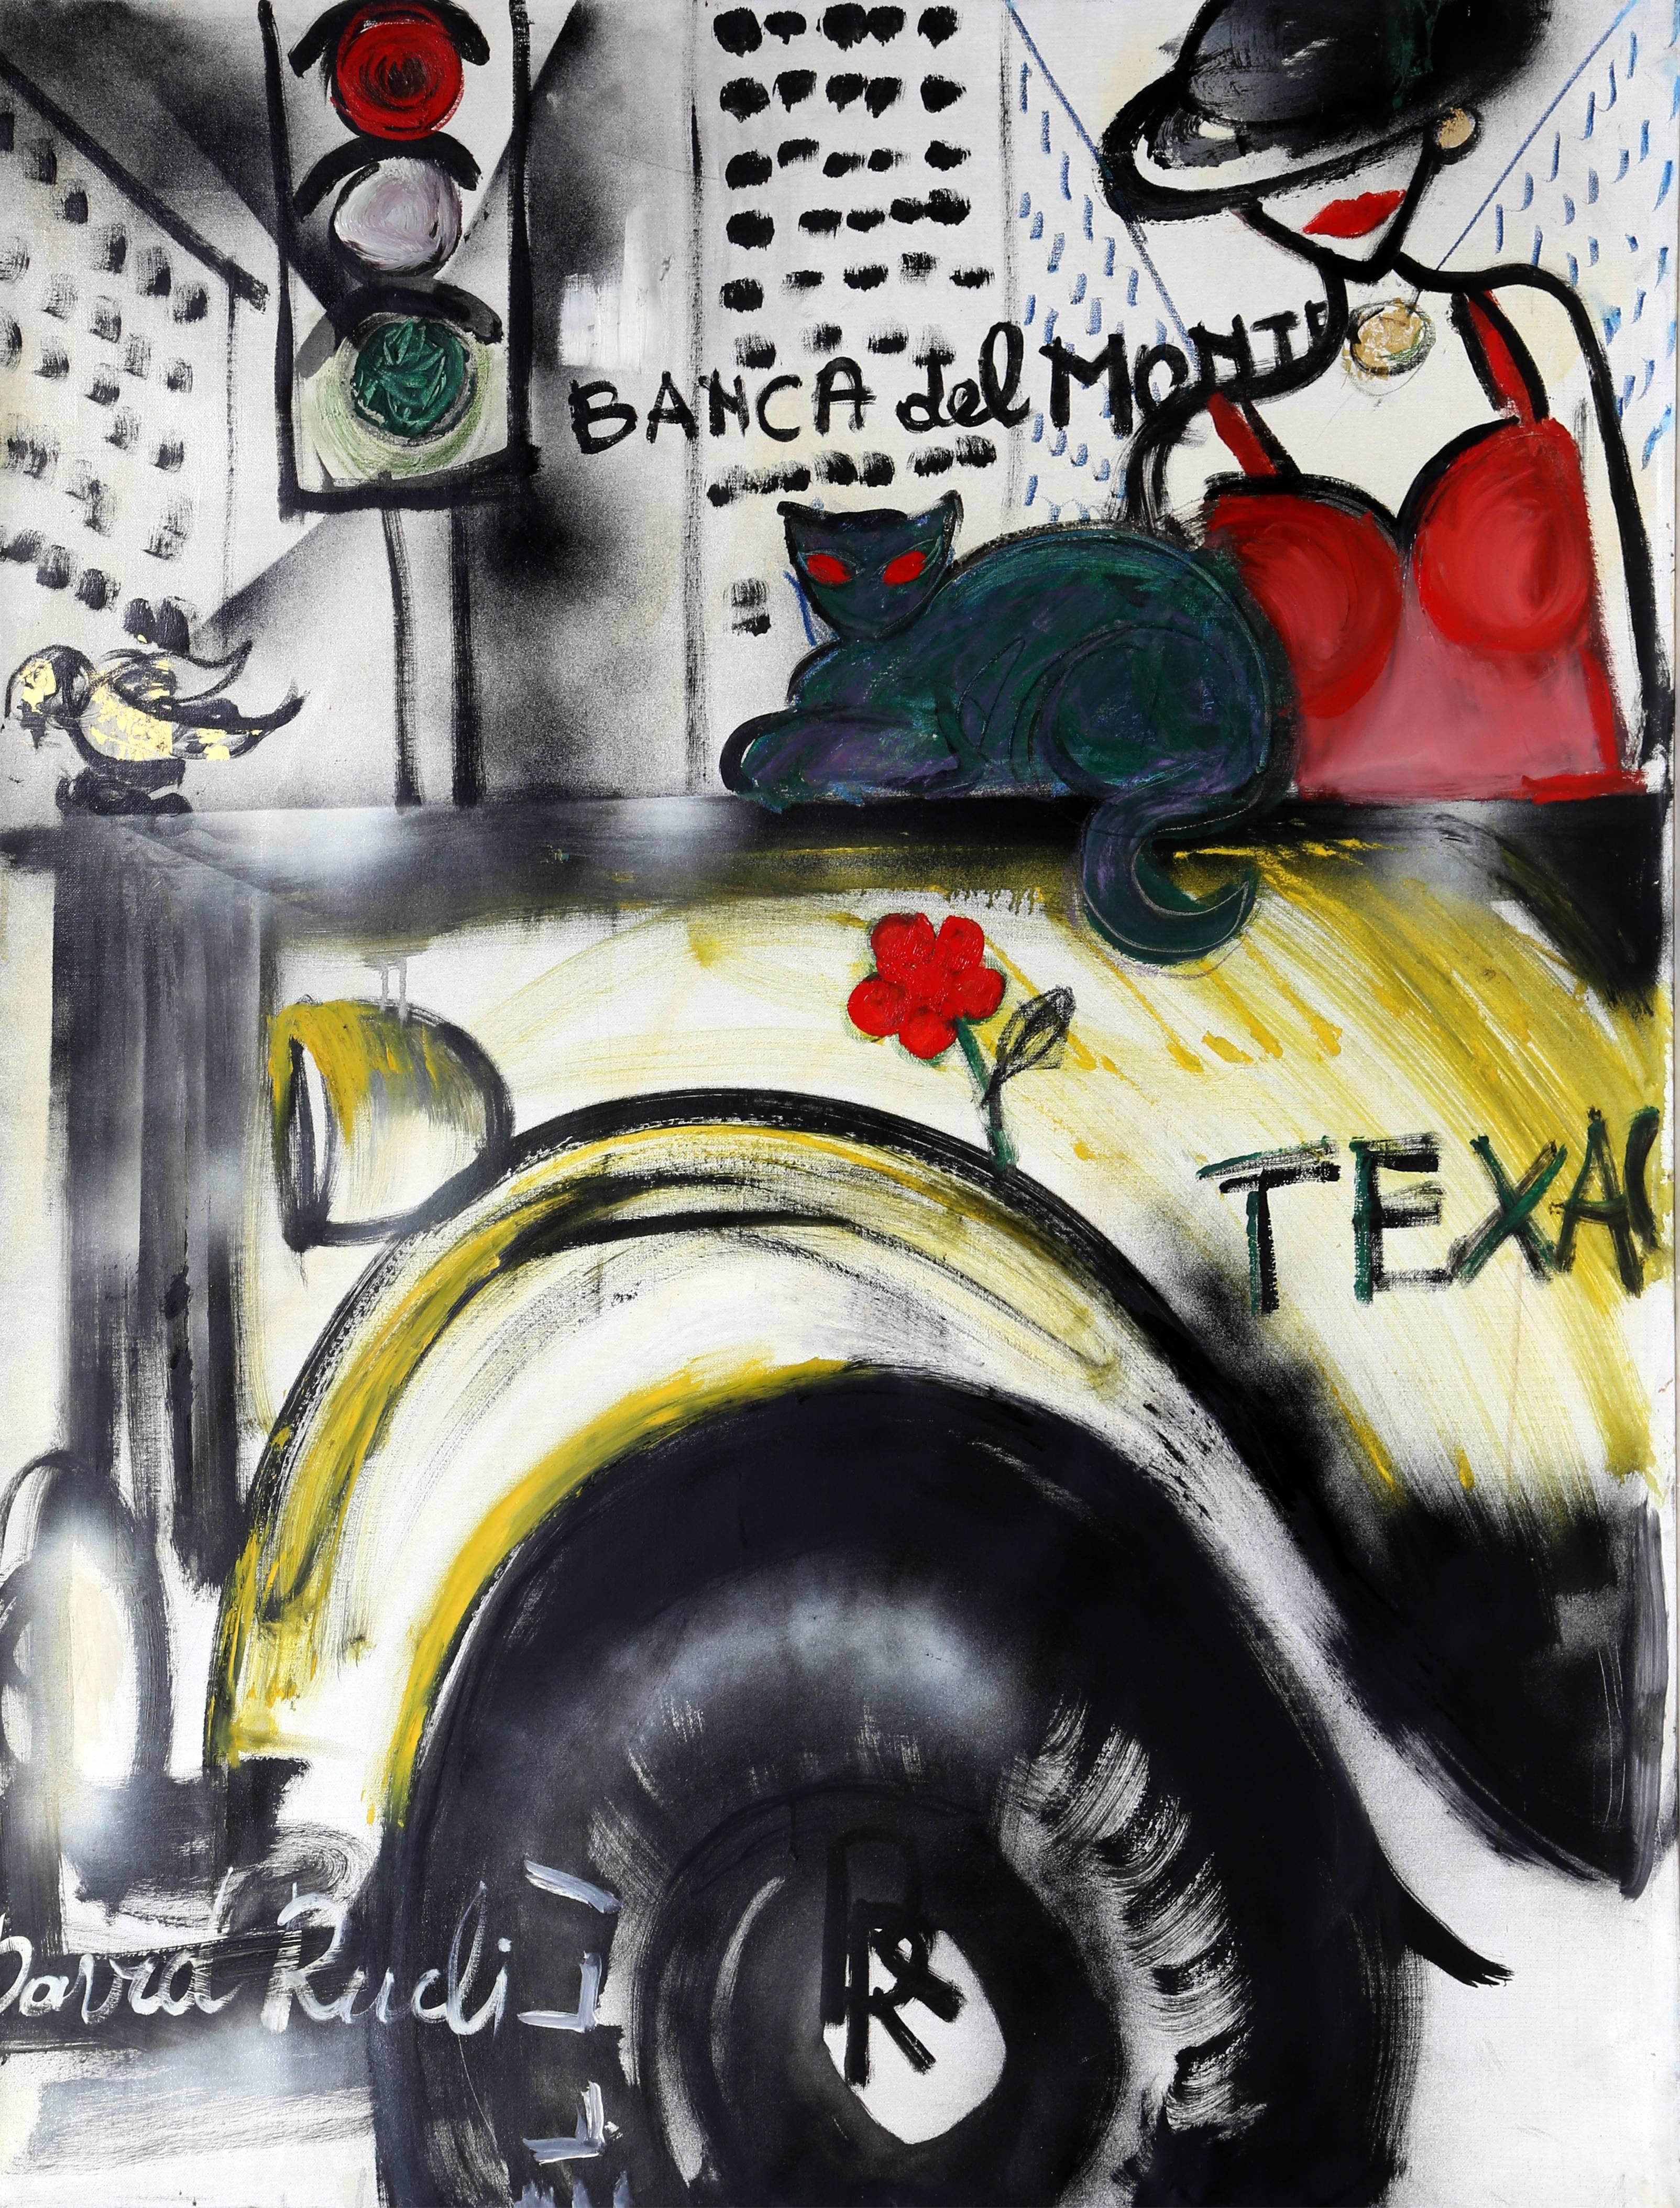 Künstler: David Rucli, Italiener (1944 - )
Titel: Banca del Monia
Jahr: um 1990
Medium: Acryl auf Leinwand, signiert v.l.n.r. 
Größe: 50,5 x 40 Zoll (128,27 x 101,6 cm)